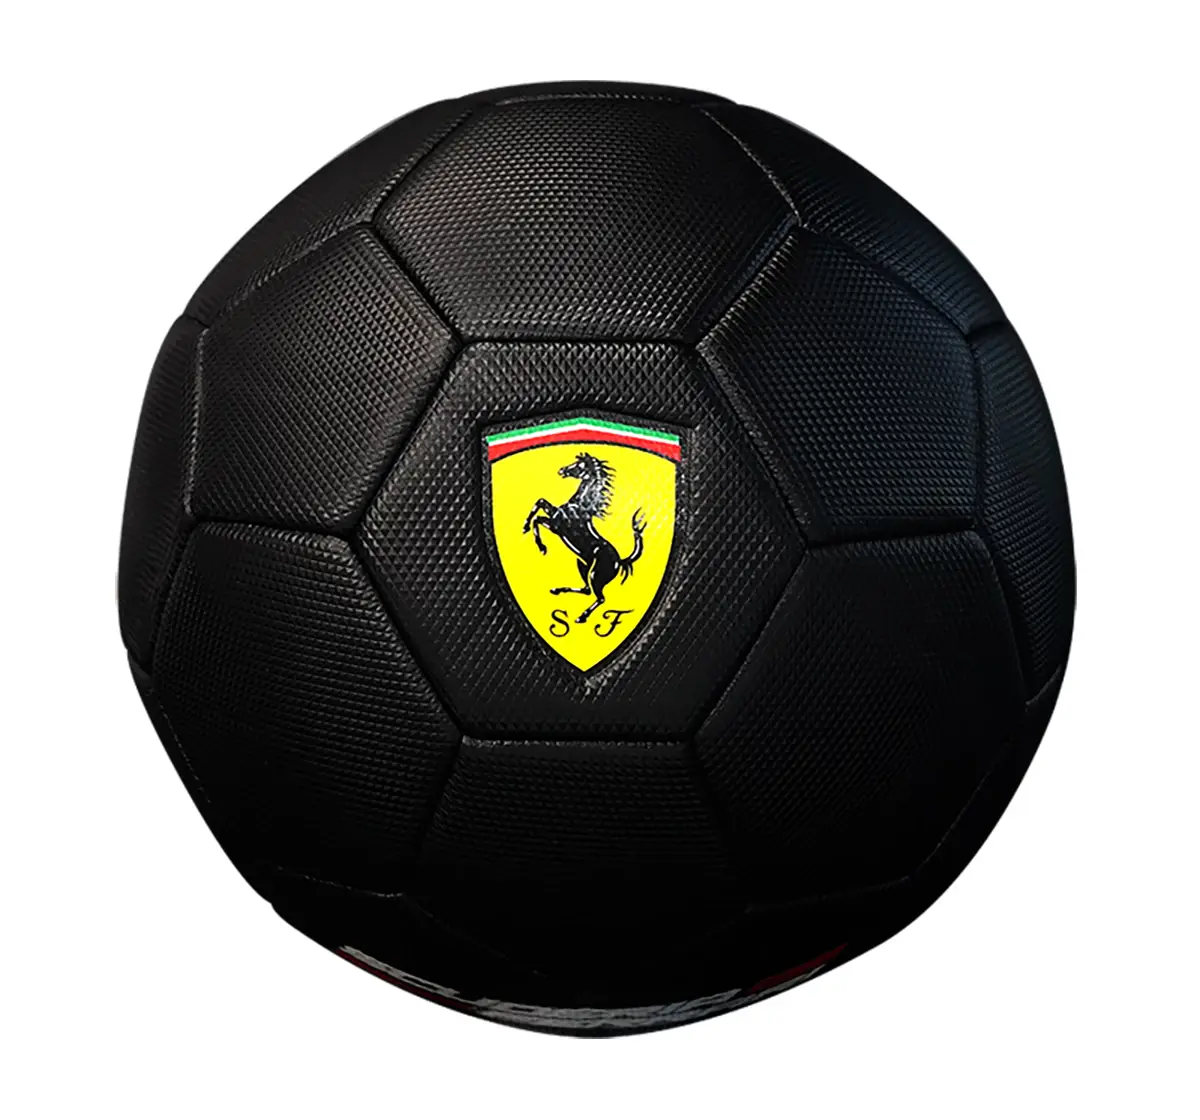 Ferrari Football Size 3 Pvc, Sports & Accessories for Kids age 6Y+ (Black)